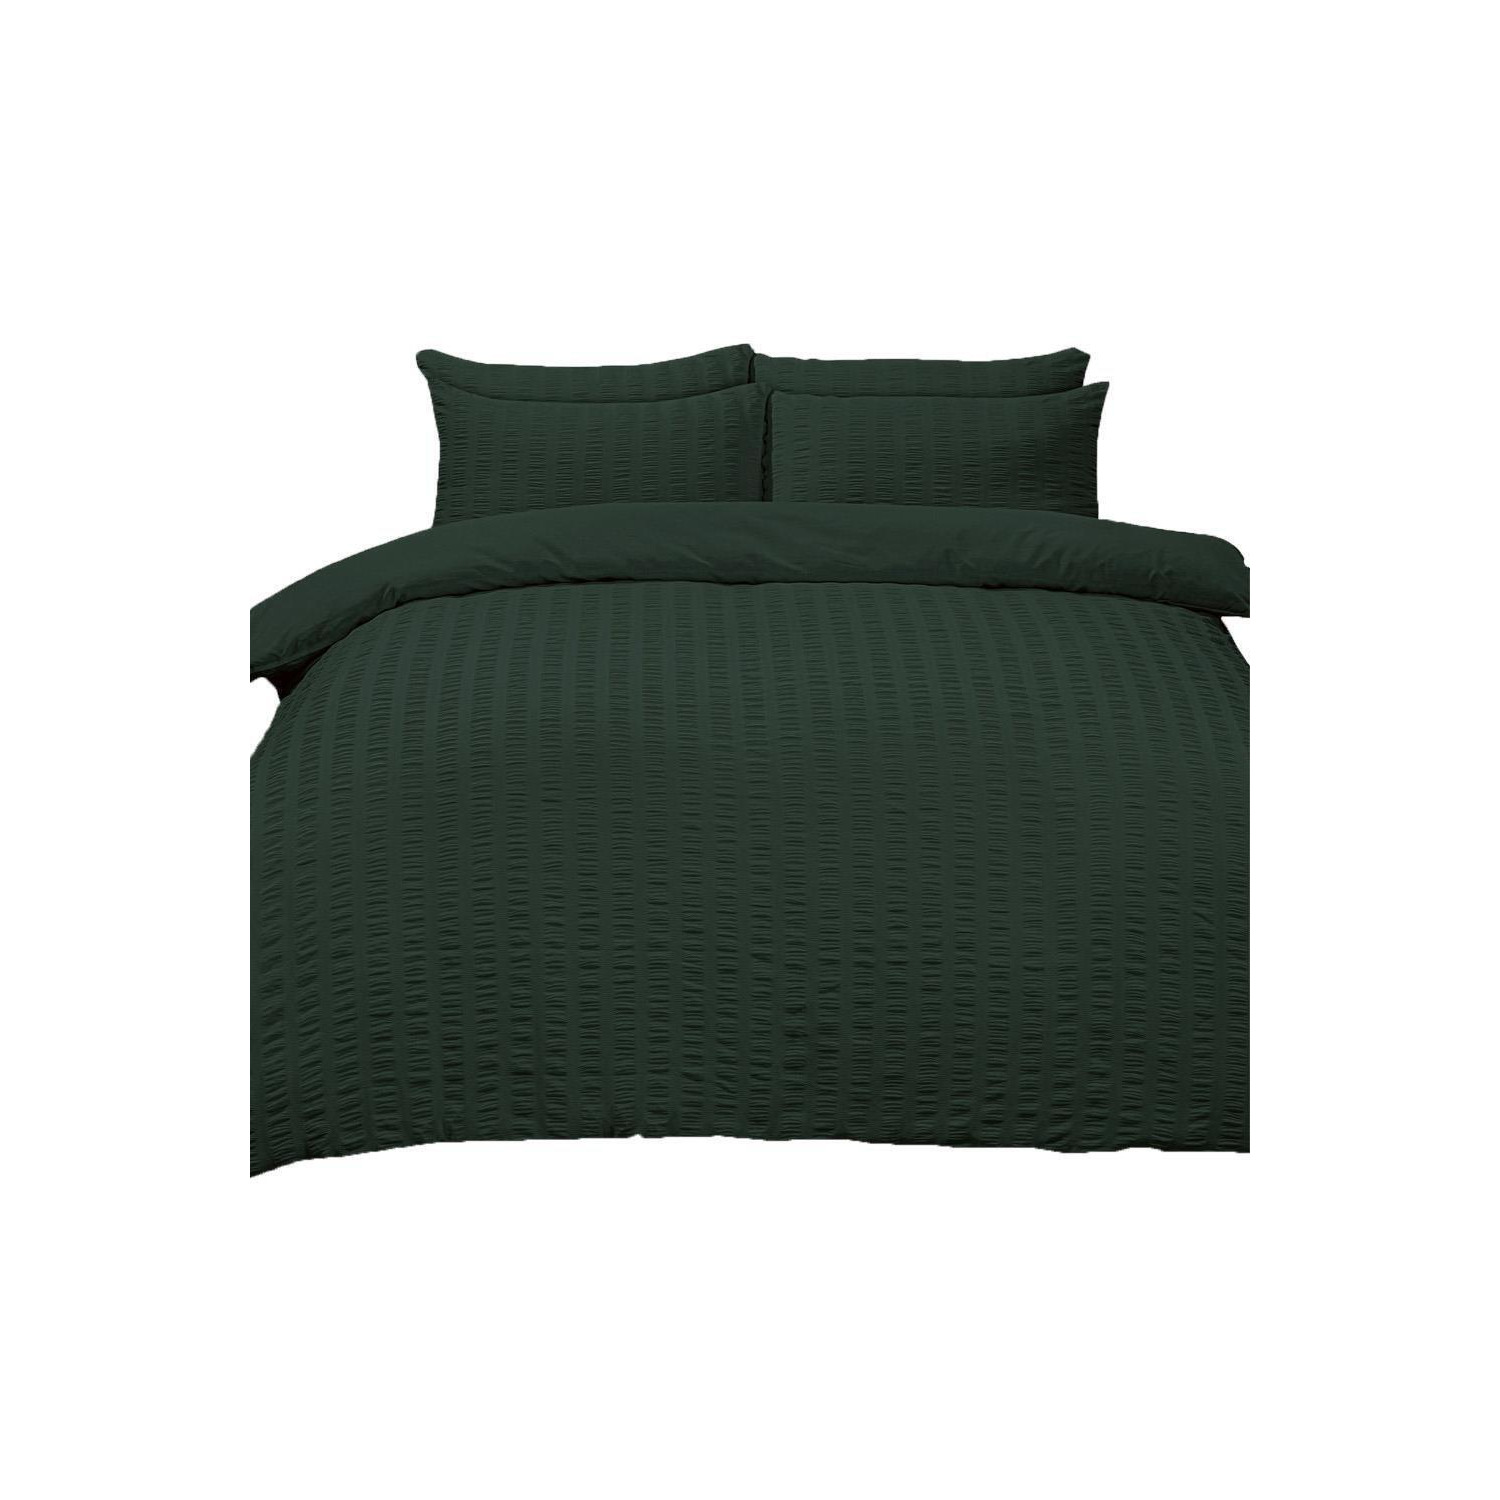 Seersucker Duvet Cover with Pillowcase Bedding